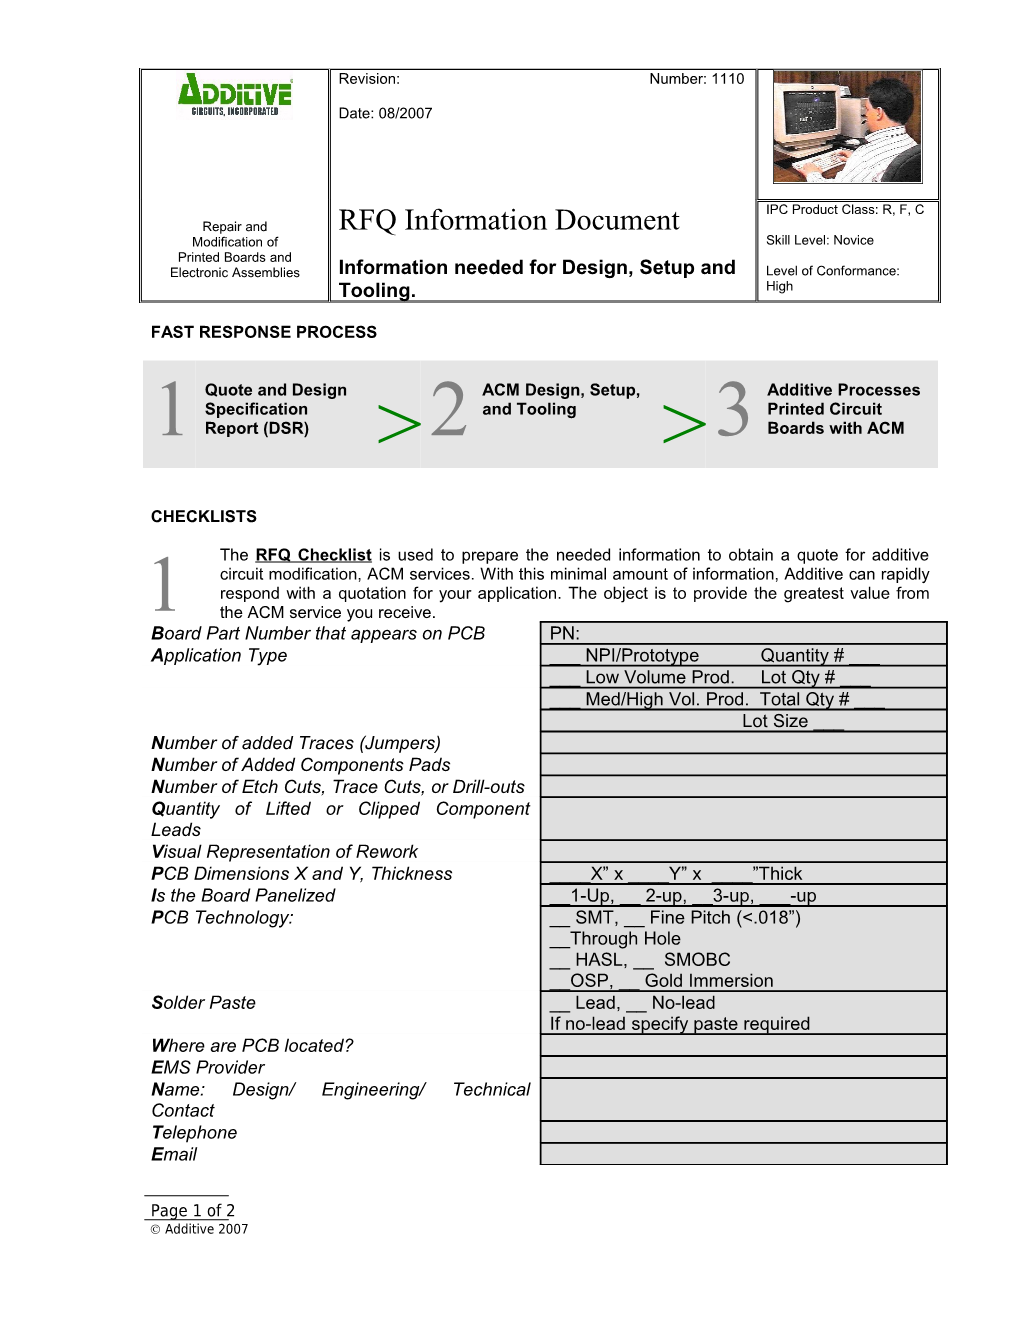 RFQ Information Document